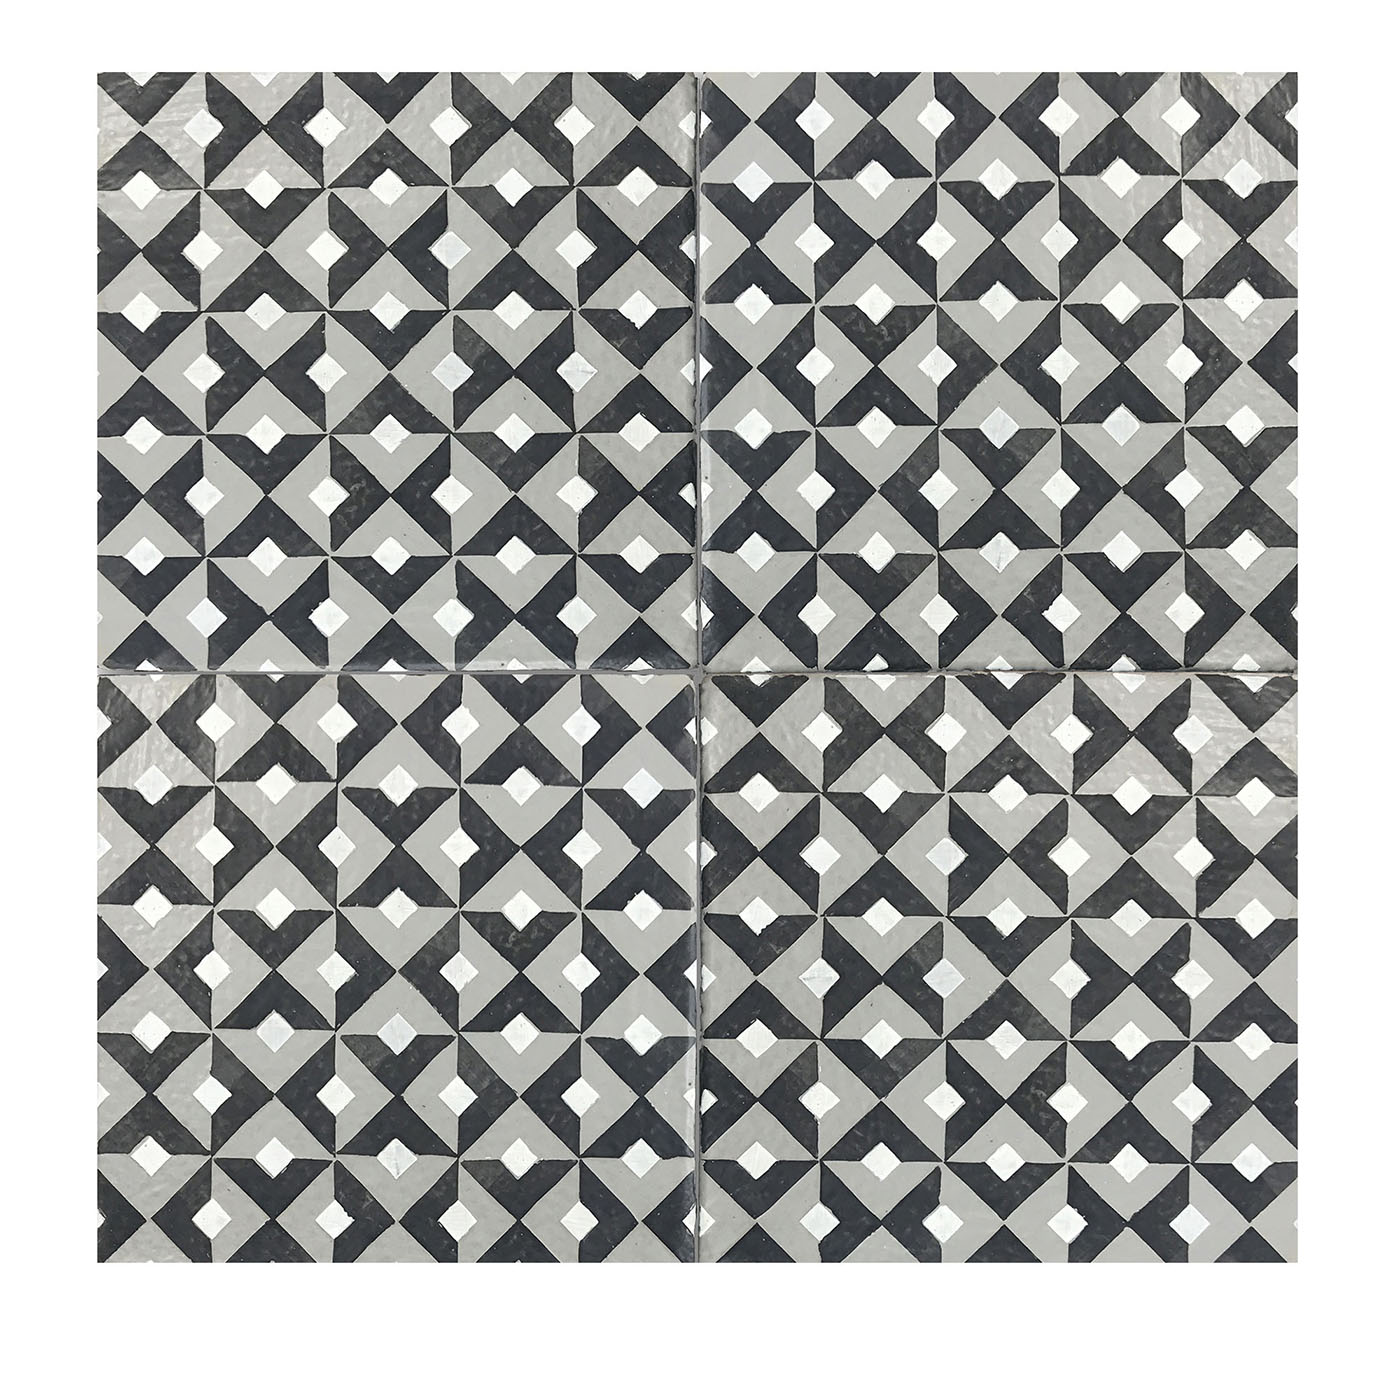 Daamè Set of 25 Square Gray Tiles #1 - Main view